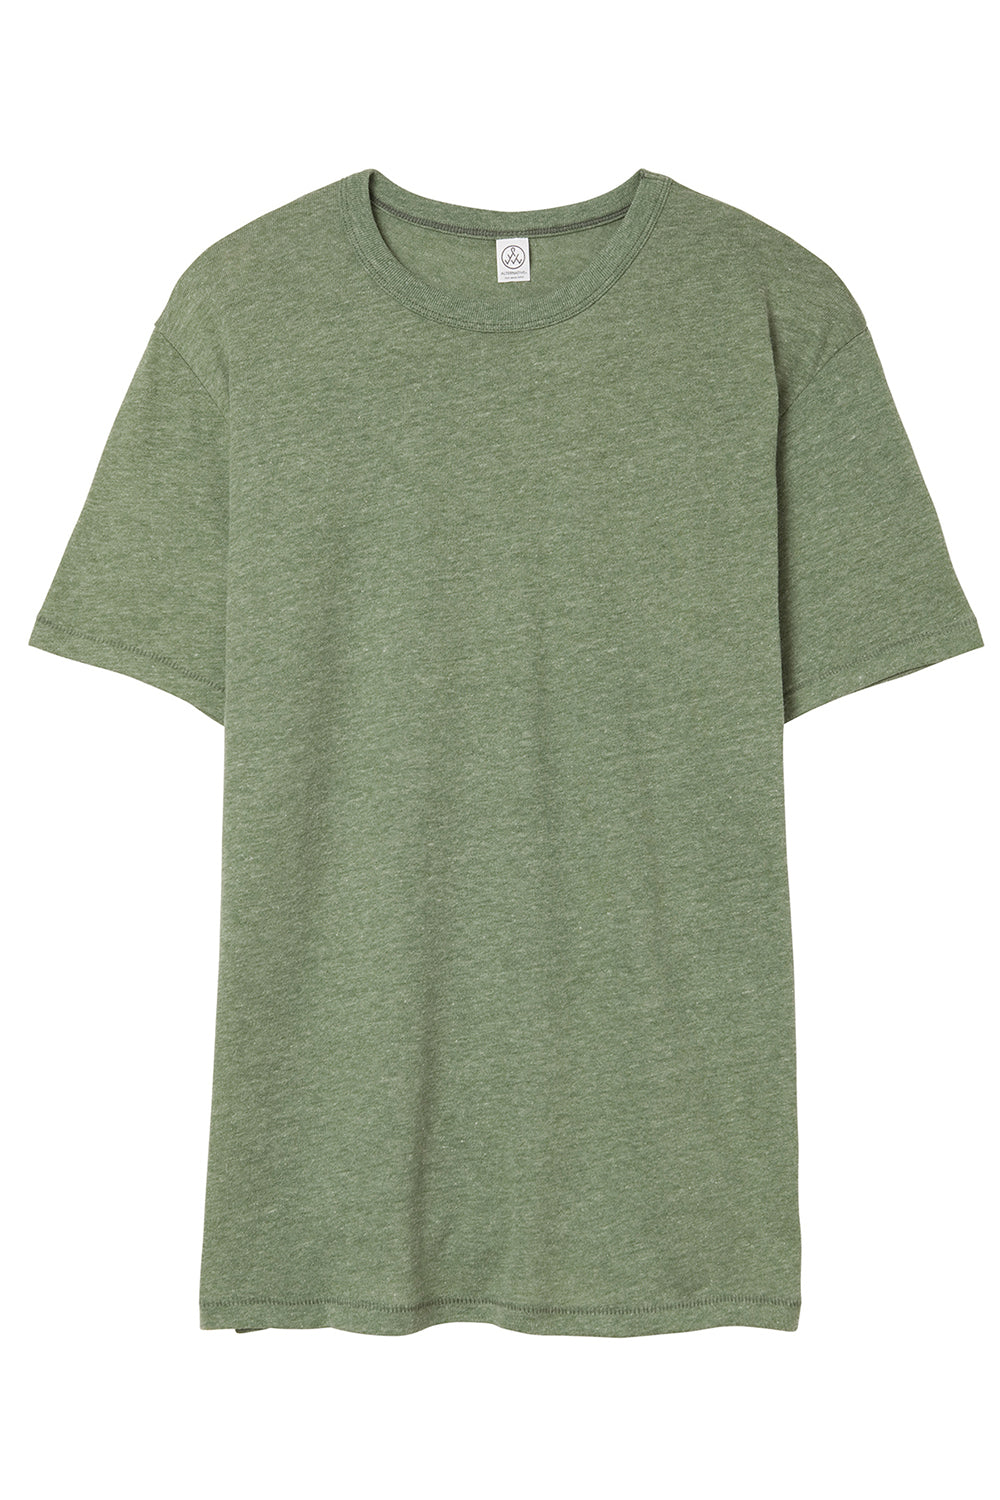 Alternative AA5050/05050BP/5050 Mens The Keeper Vintage Short Sleeve Crewneck T-Shirt Vintage Pine Green Flat Front